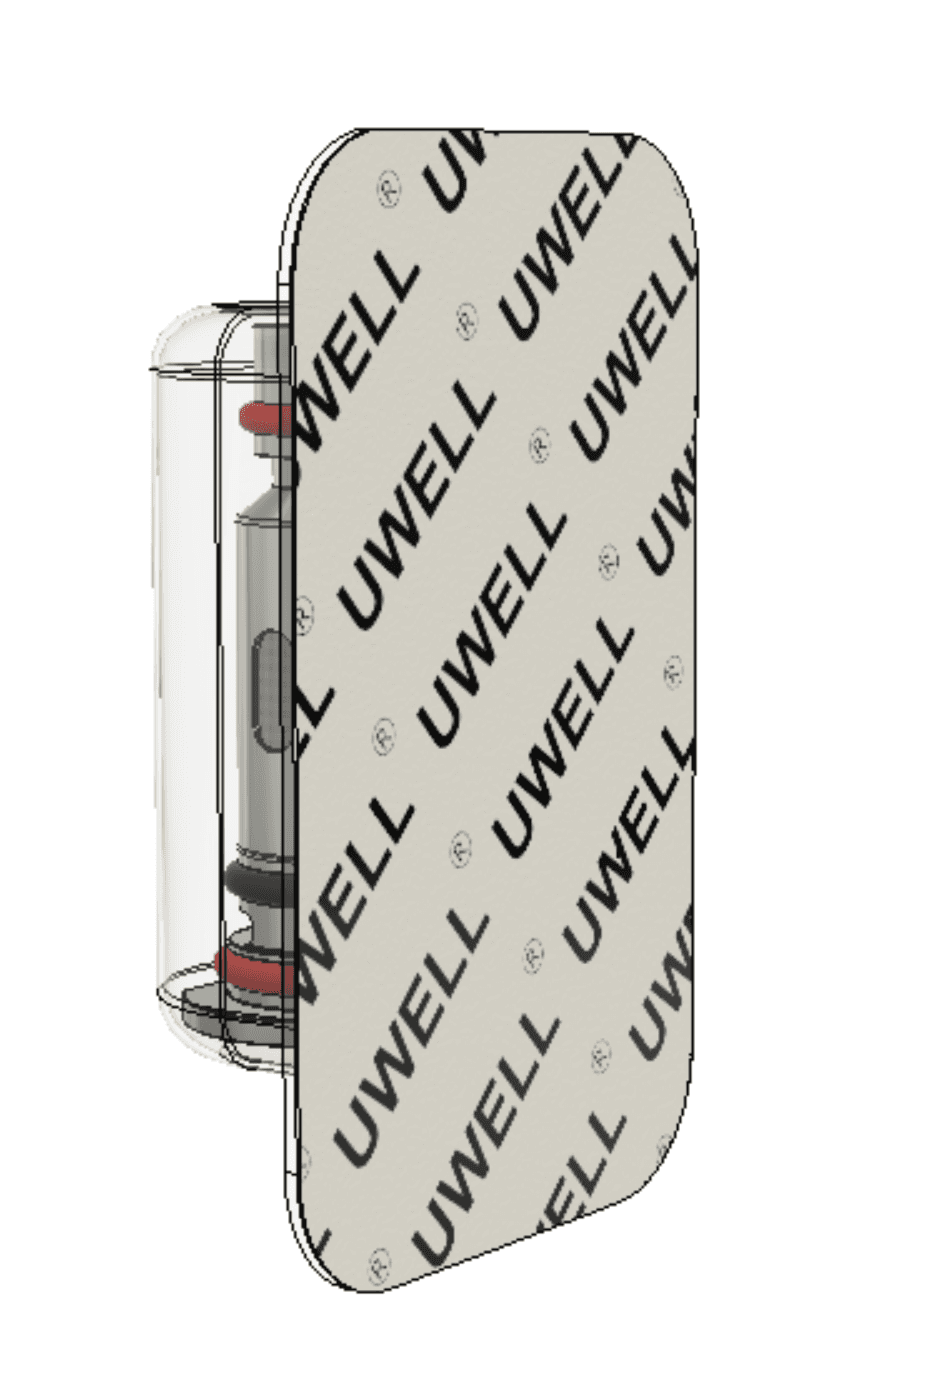 wraped uwell caliburn coil 3d model